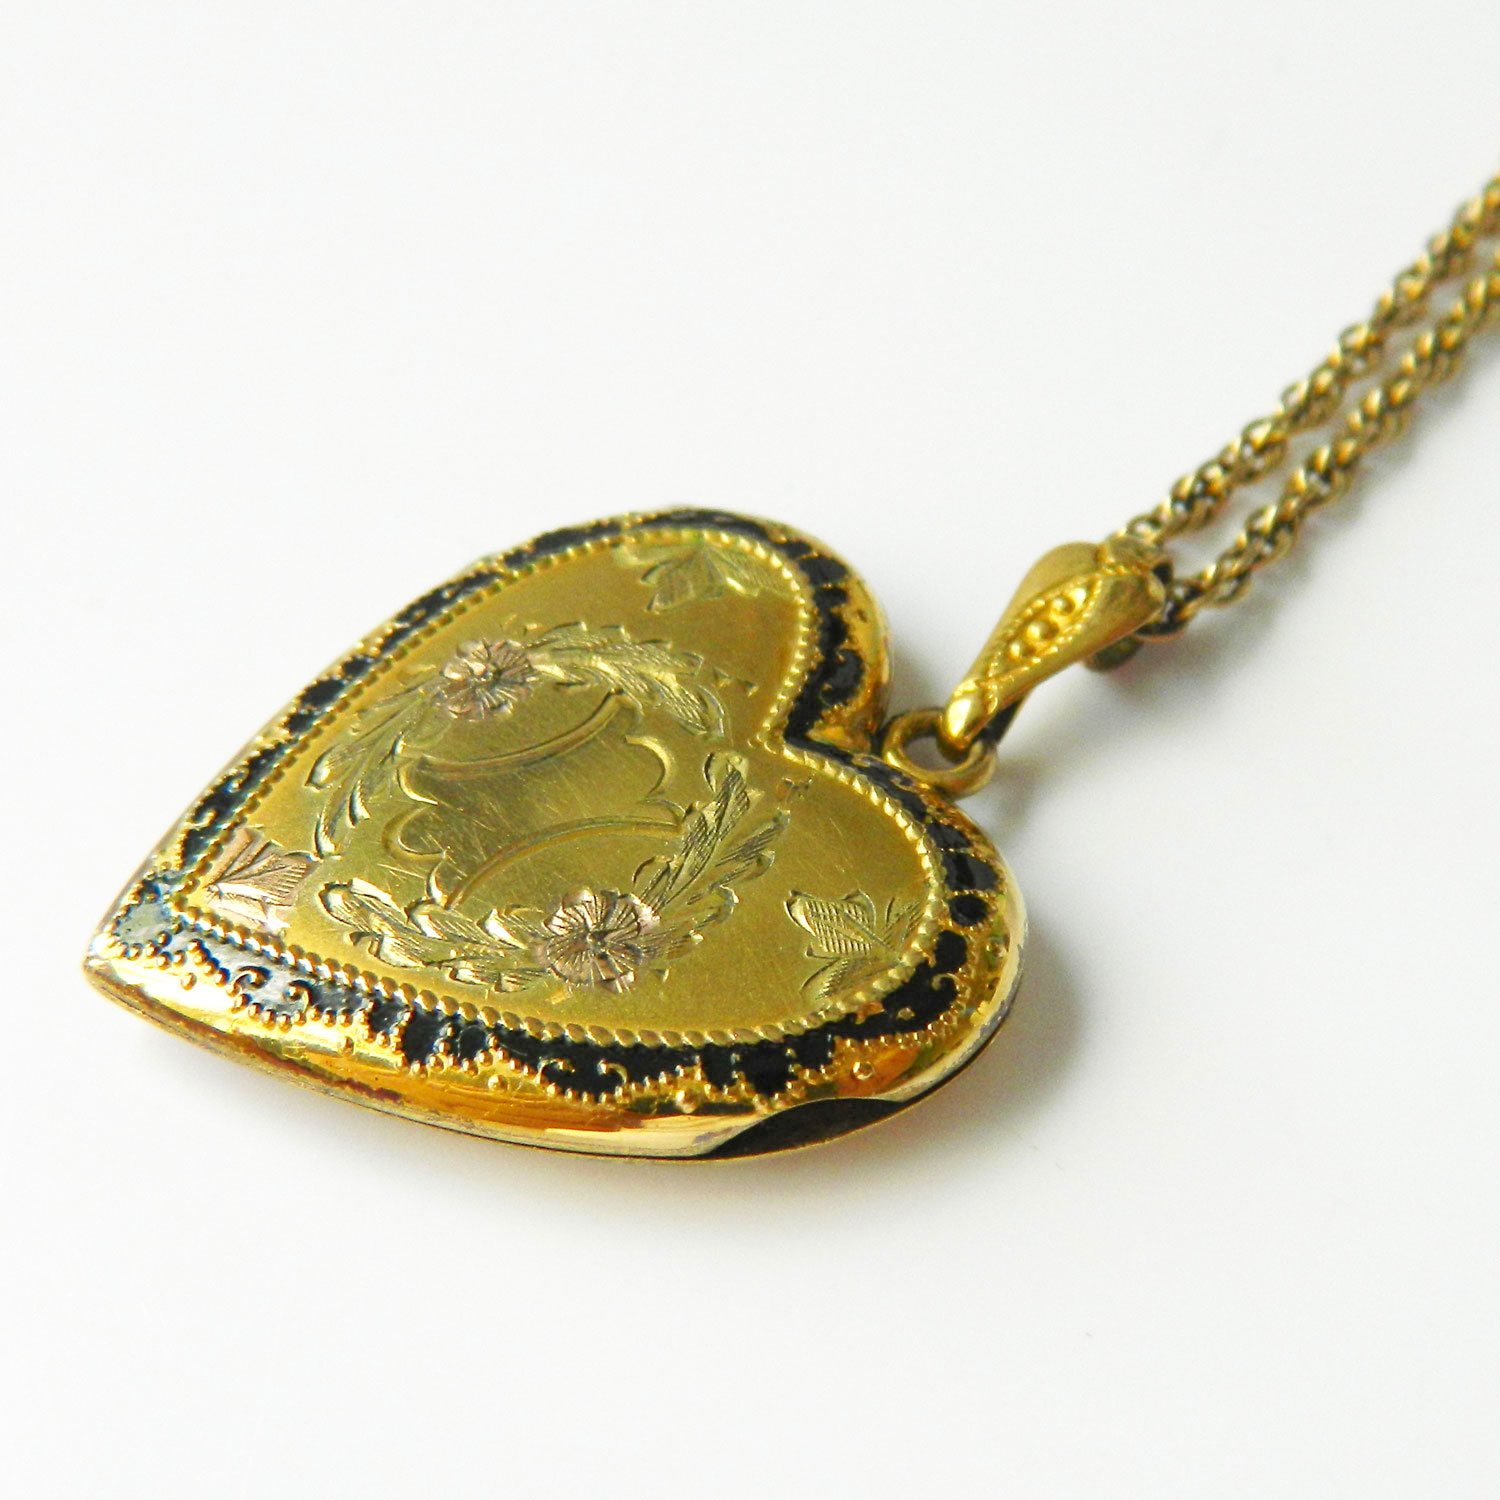 Antique heart locket necklace